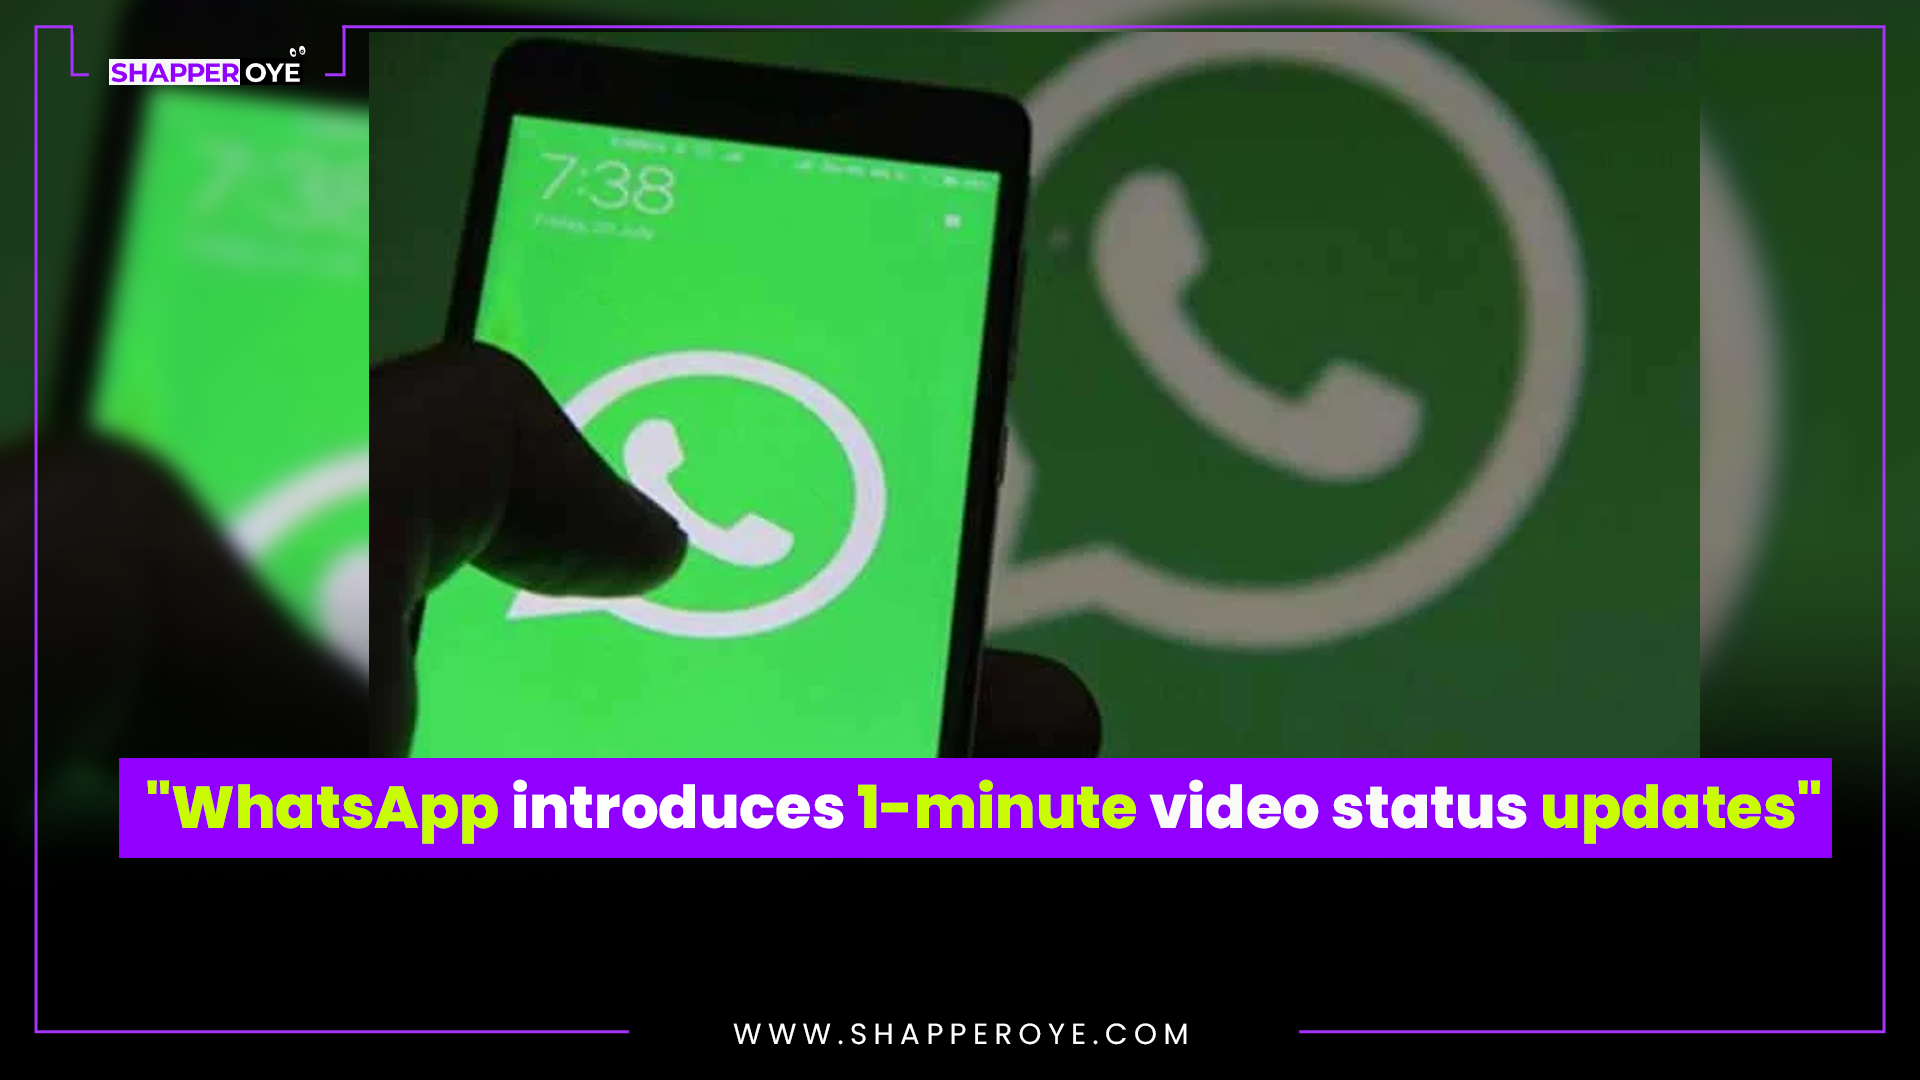 WhatsApp introduces 1-minute video status updates